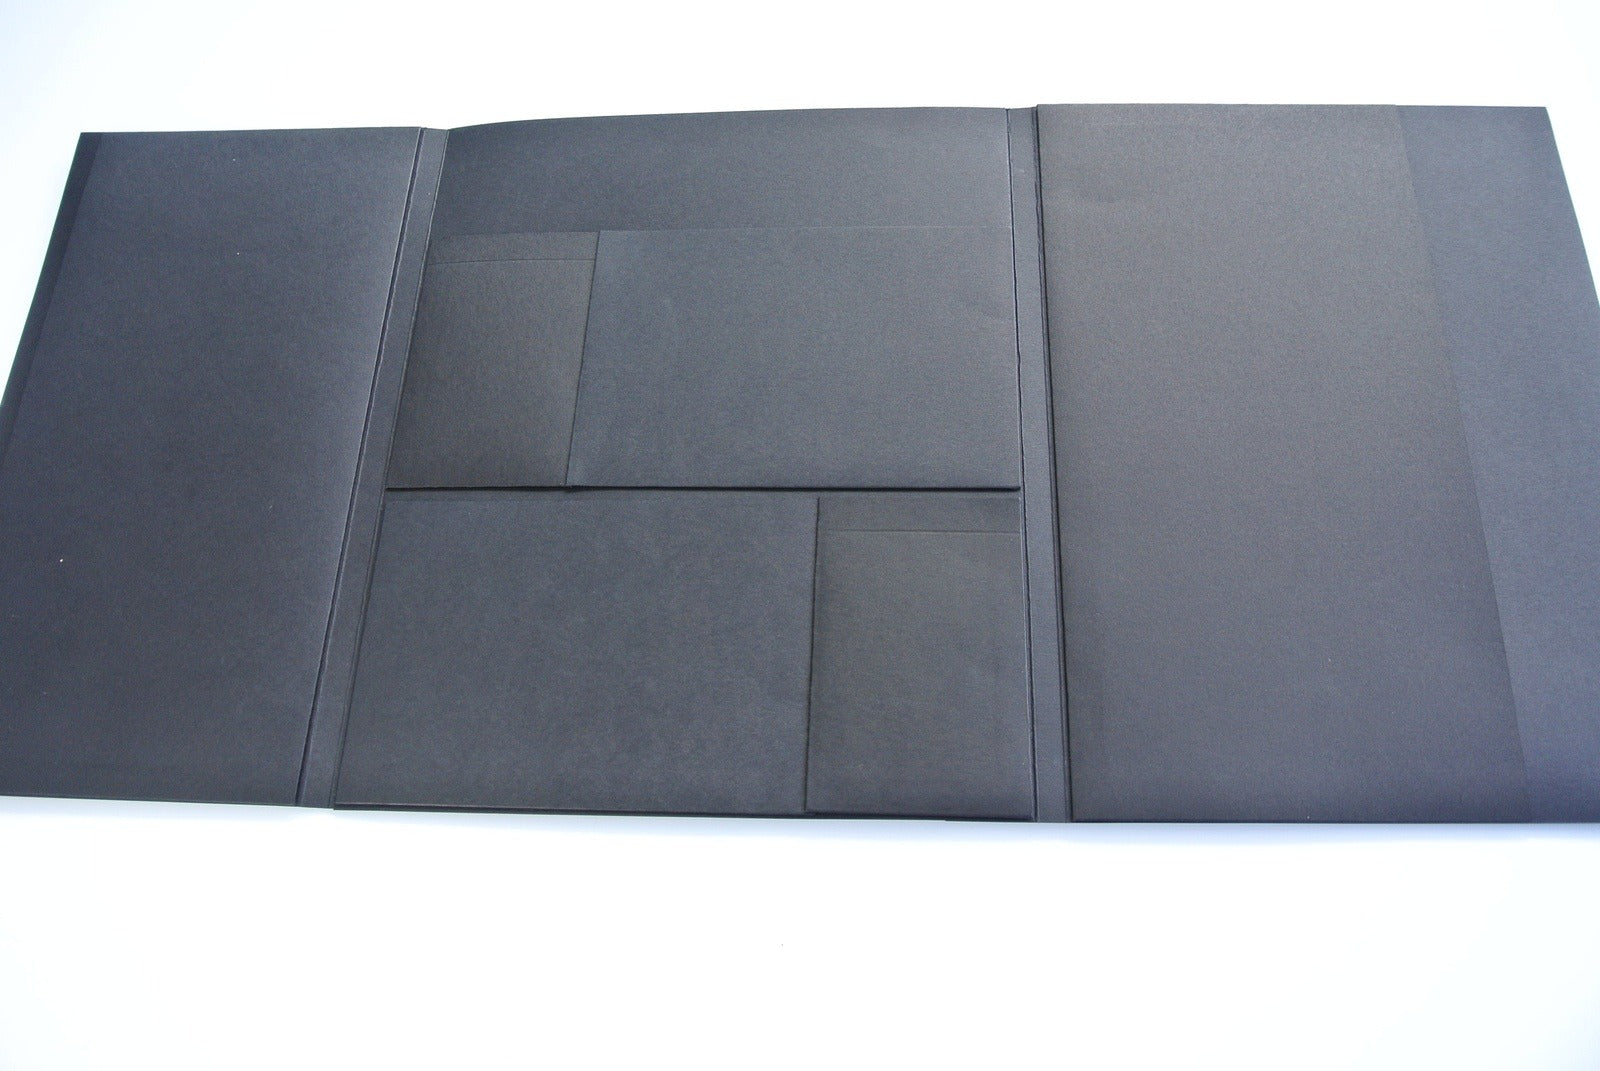 Folio Style Mini Album Kit, Blank Scrapbook Photo Album - Premade